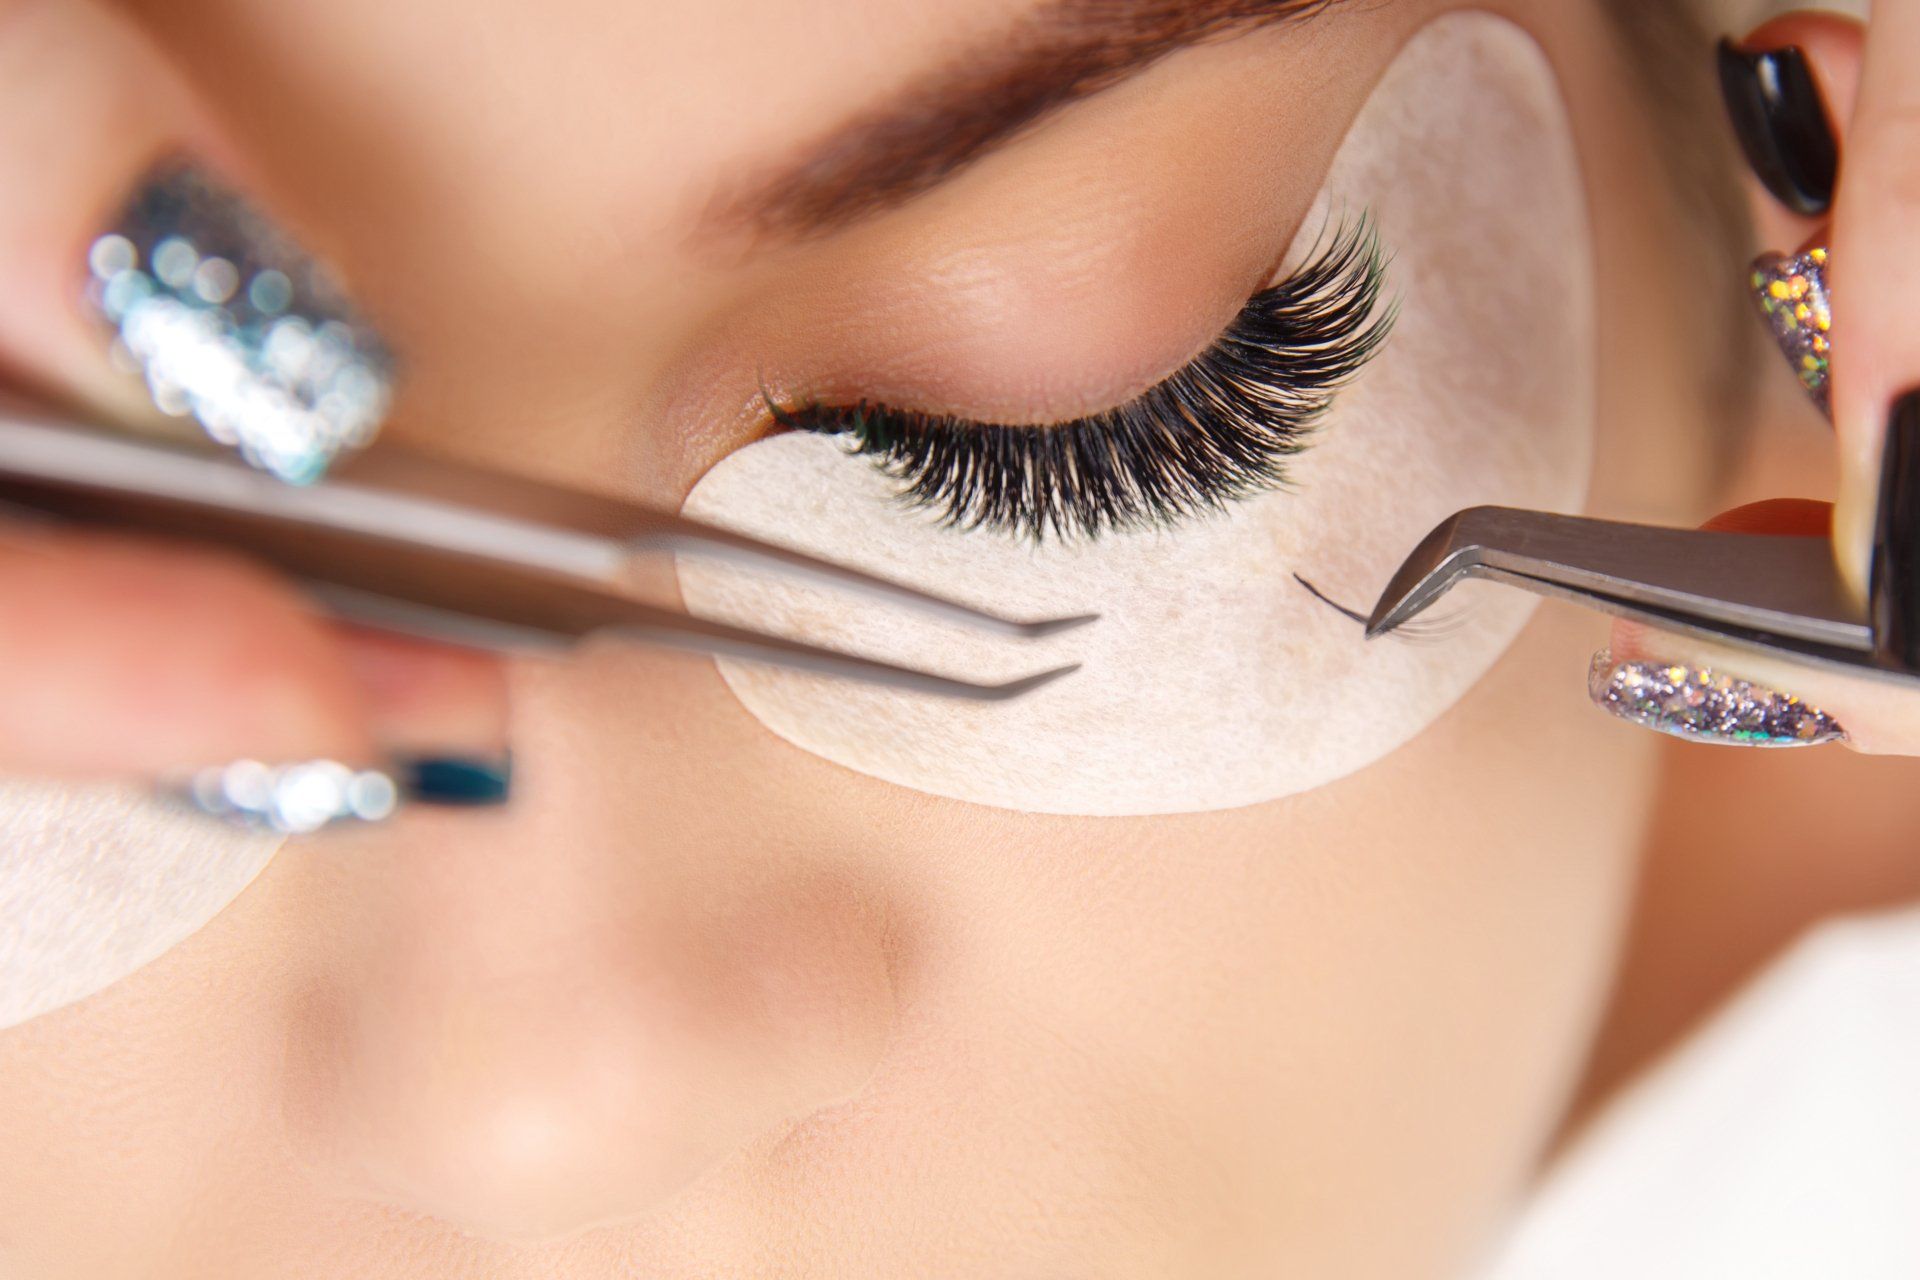 A woman getting eyelash extensions